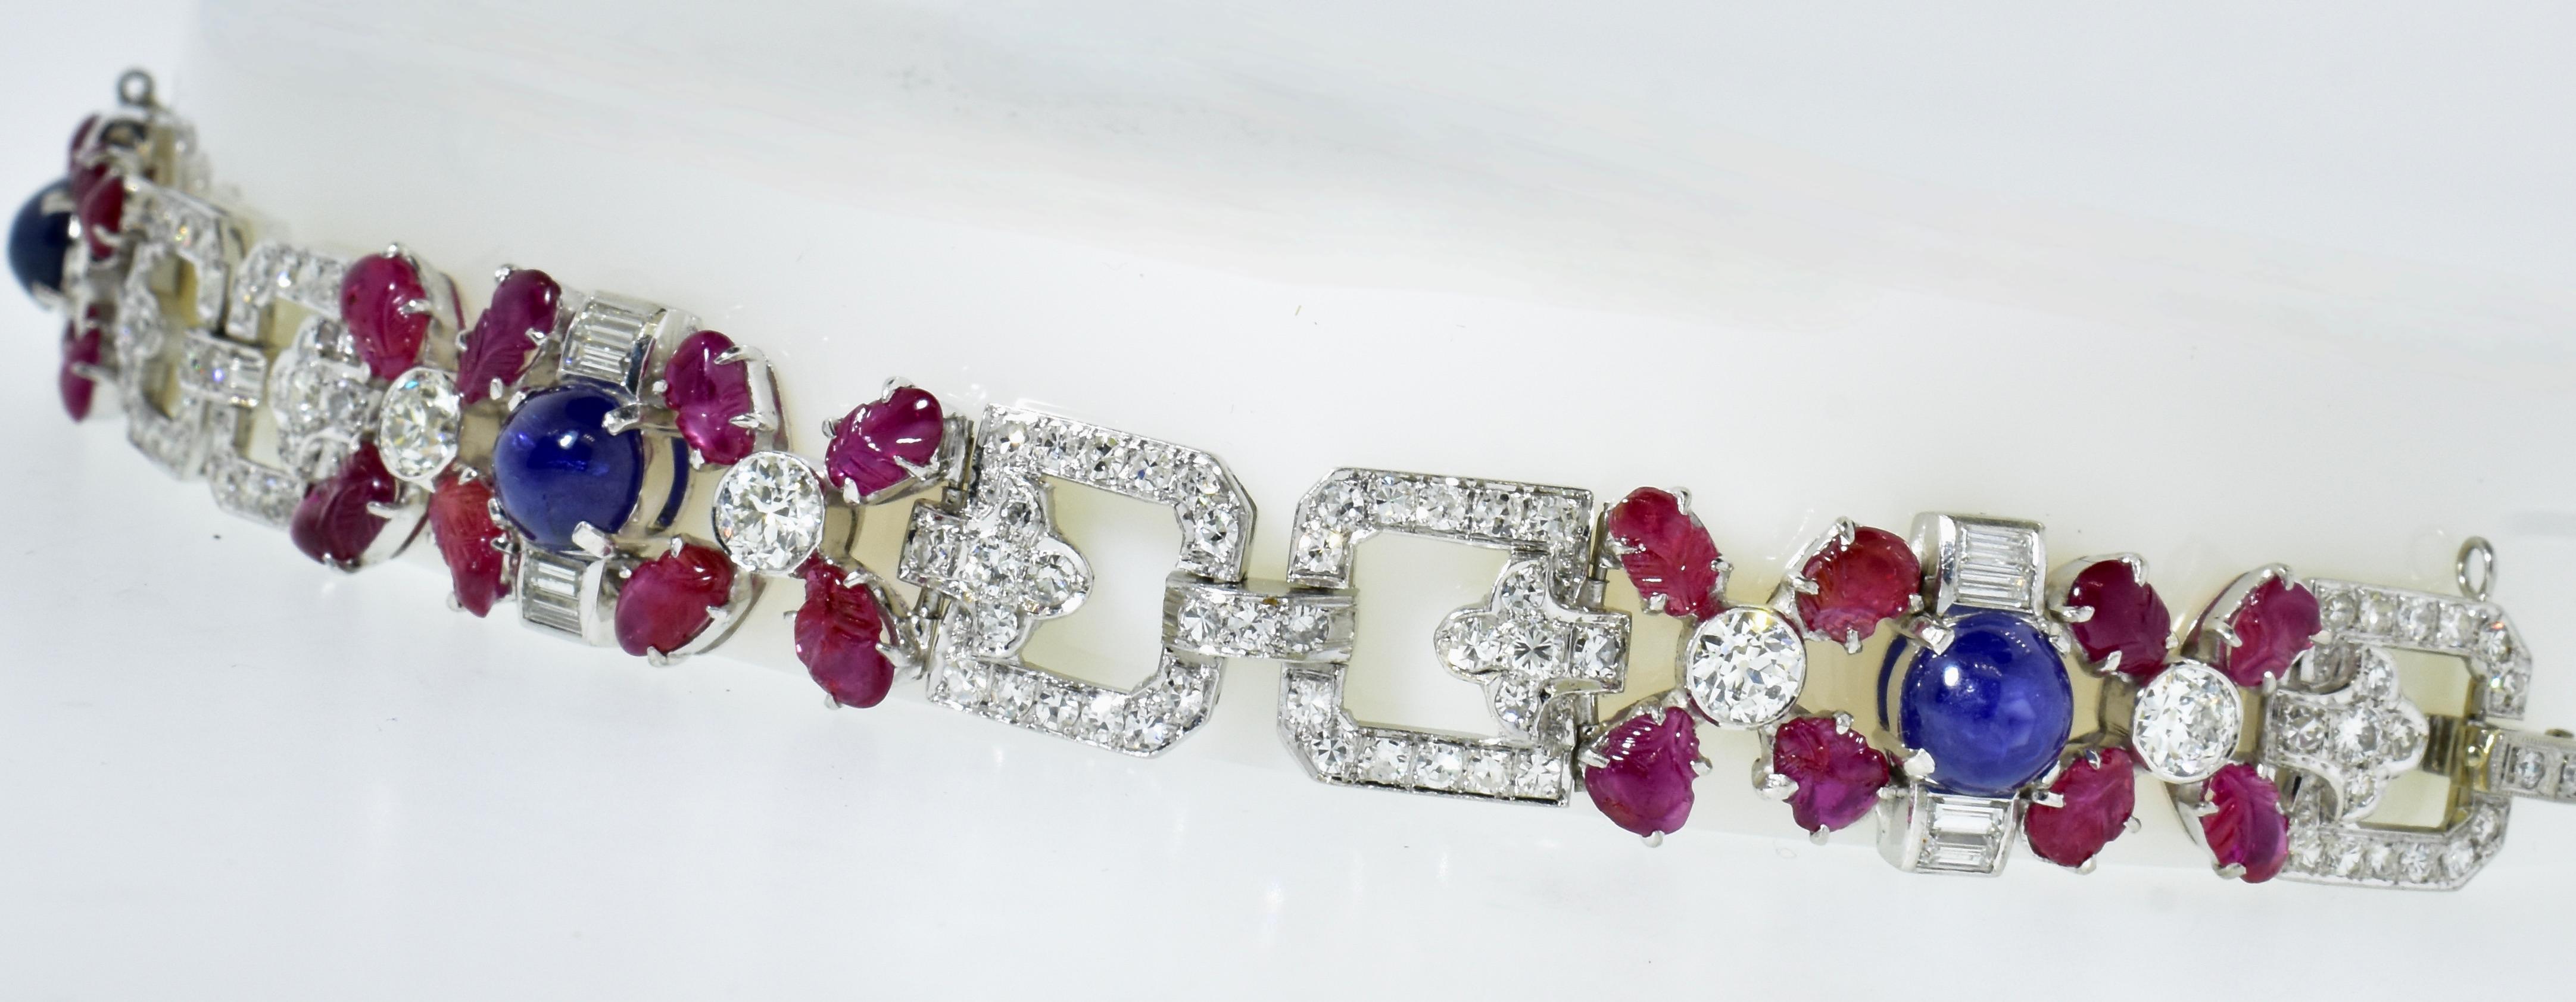 Tutti Frutti Art Deco Antique Diamond, Ruby & Sapphire Plat, Bracelet circa 1922 For Sale 3